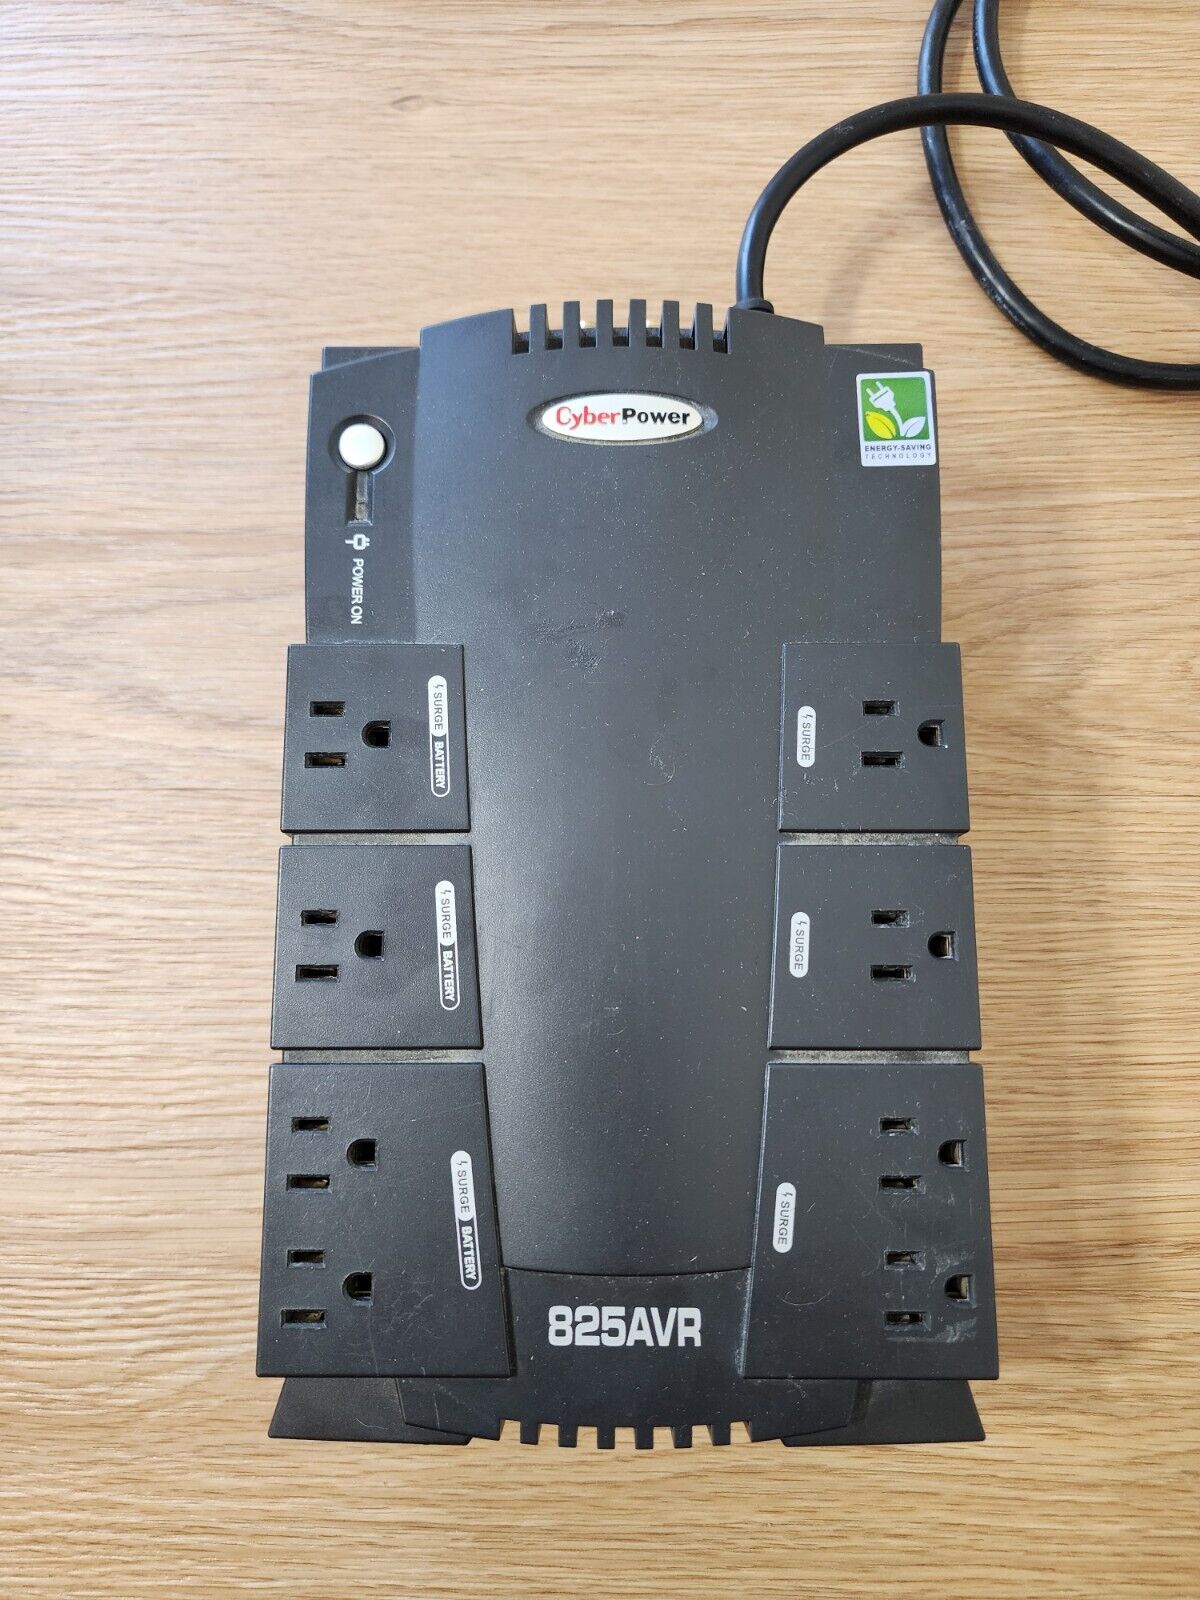 CyberPower 825AVR Uninterruptible Power Supply- No Battery